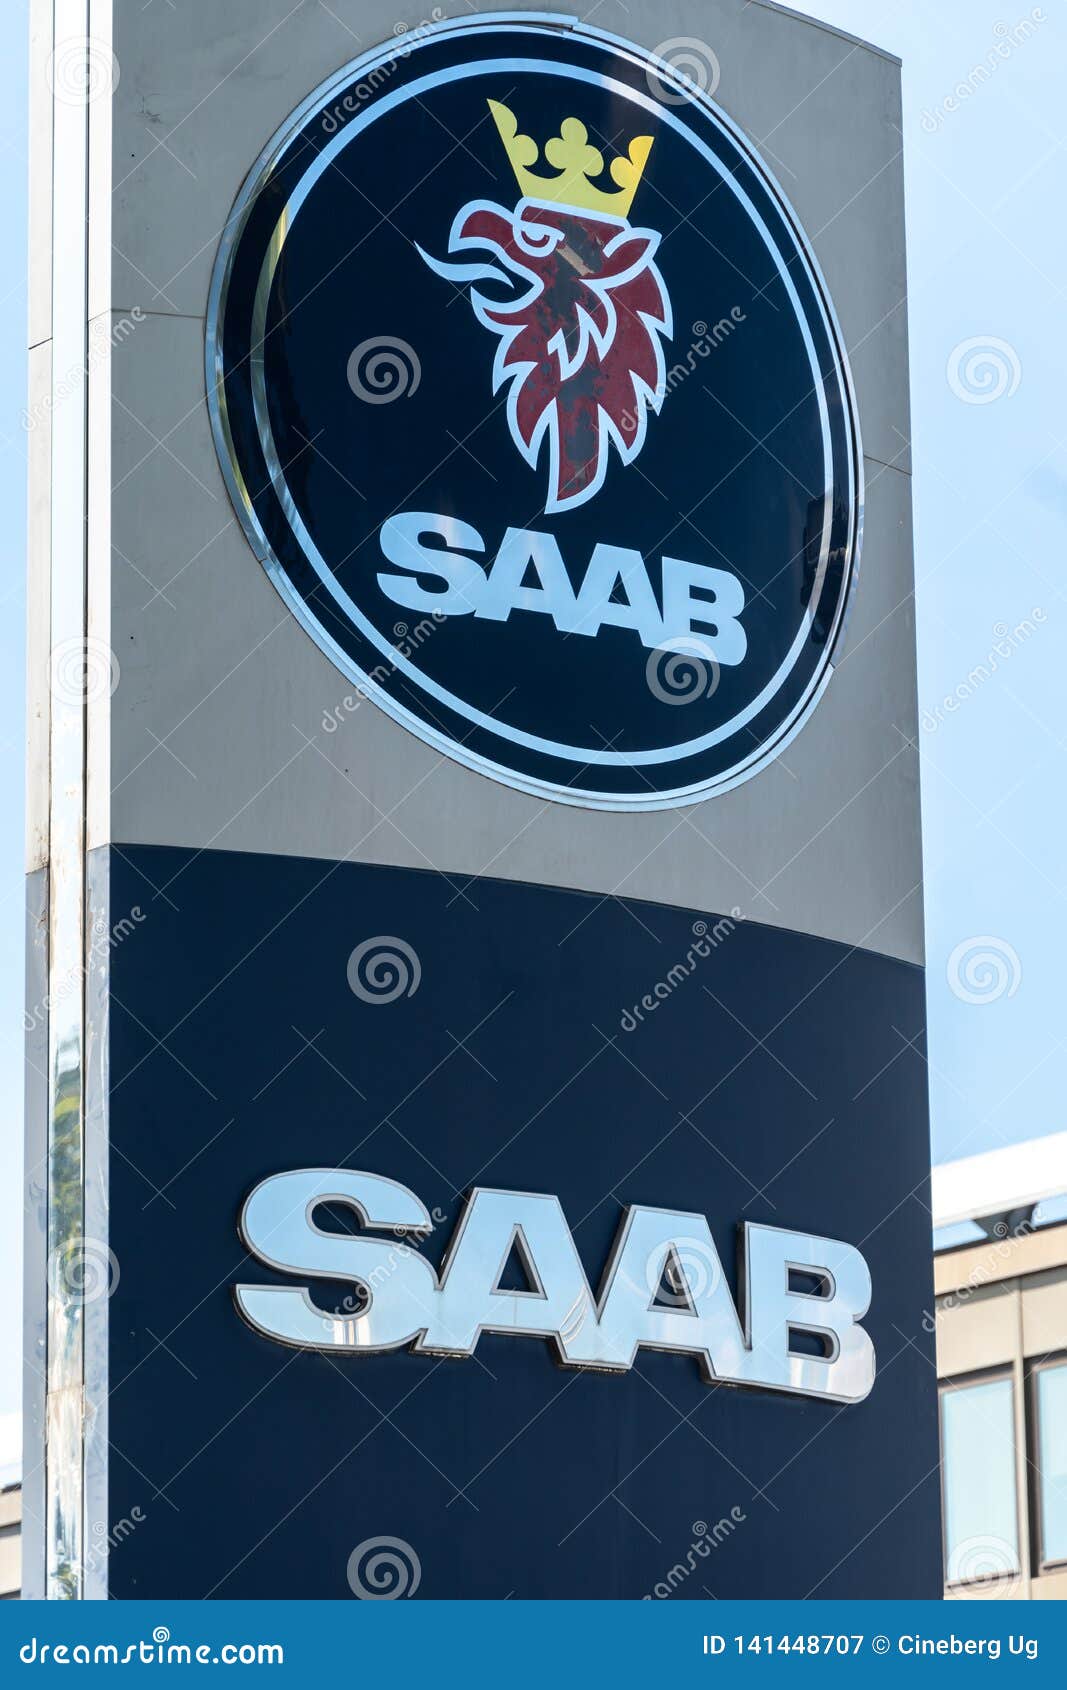 Saab Scania Sweden advertising sign 